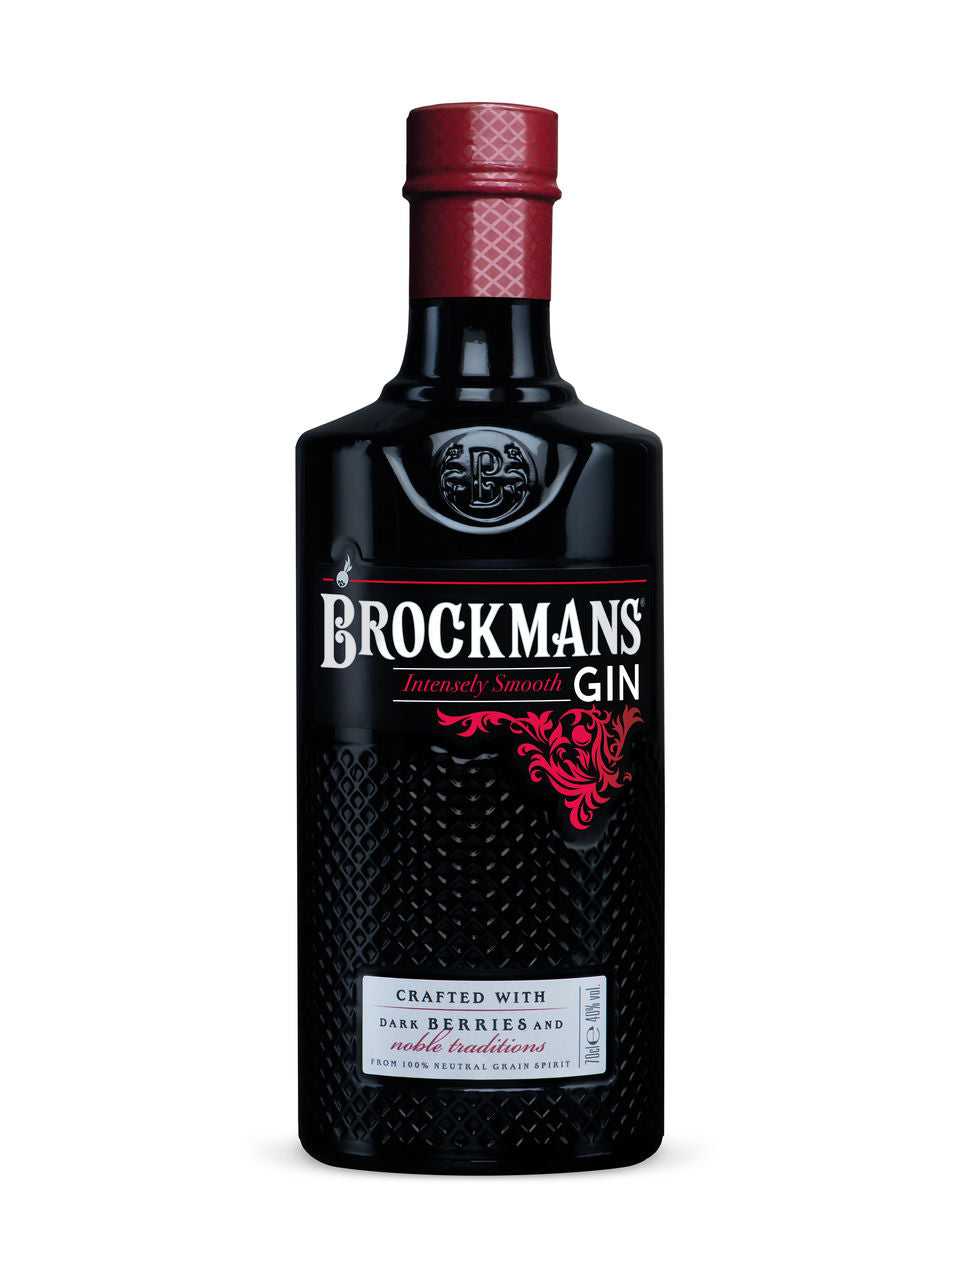 Brockmans Gin 750 ml bottle